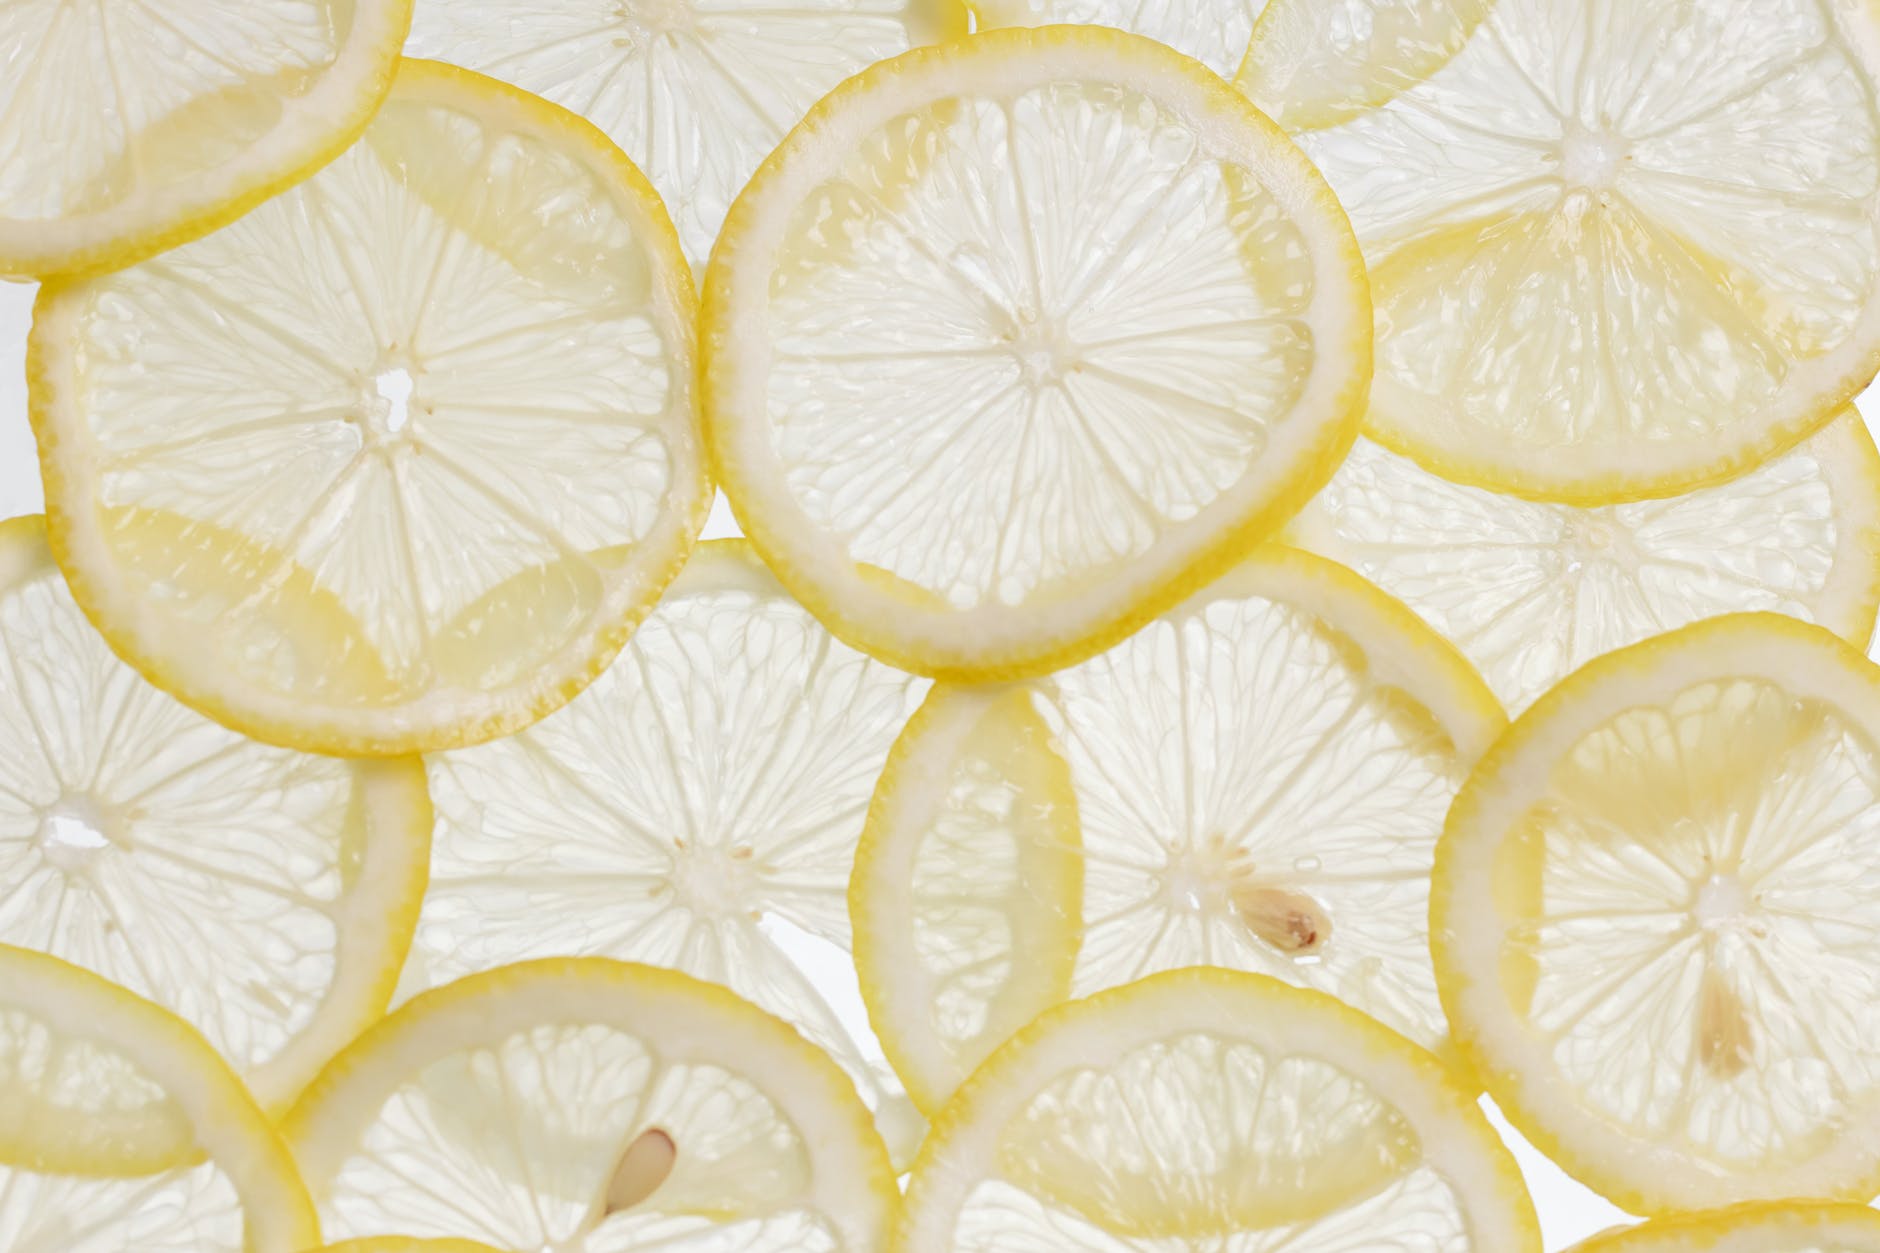 yellow lemon fruits on white metal rack